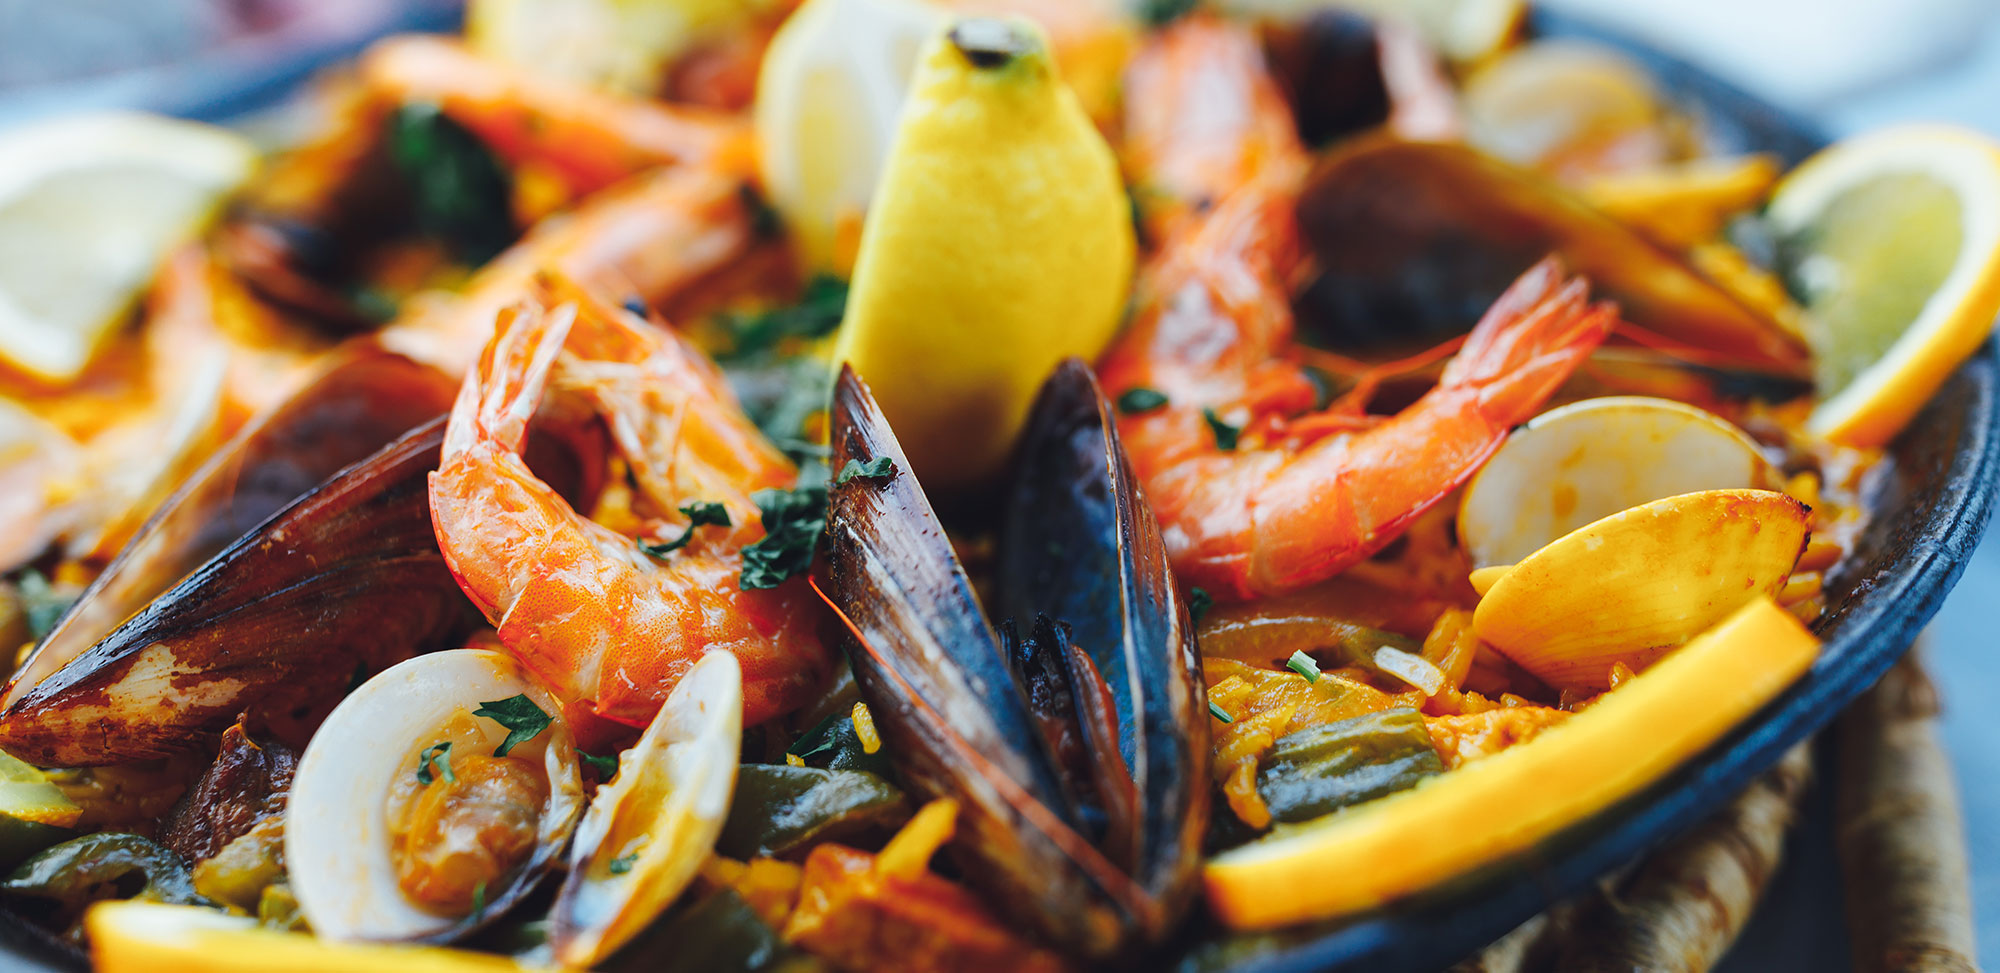 spanish seafood paella, closeup view